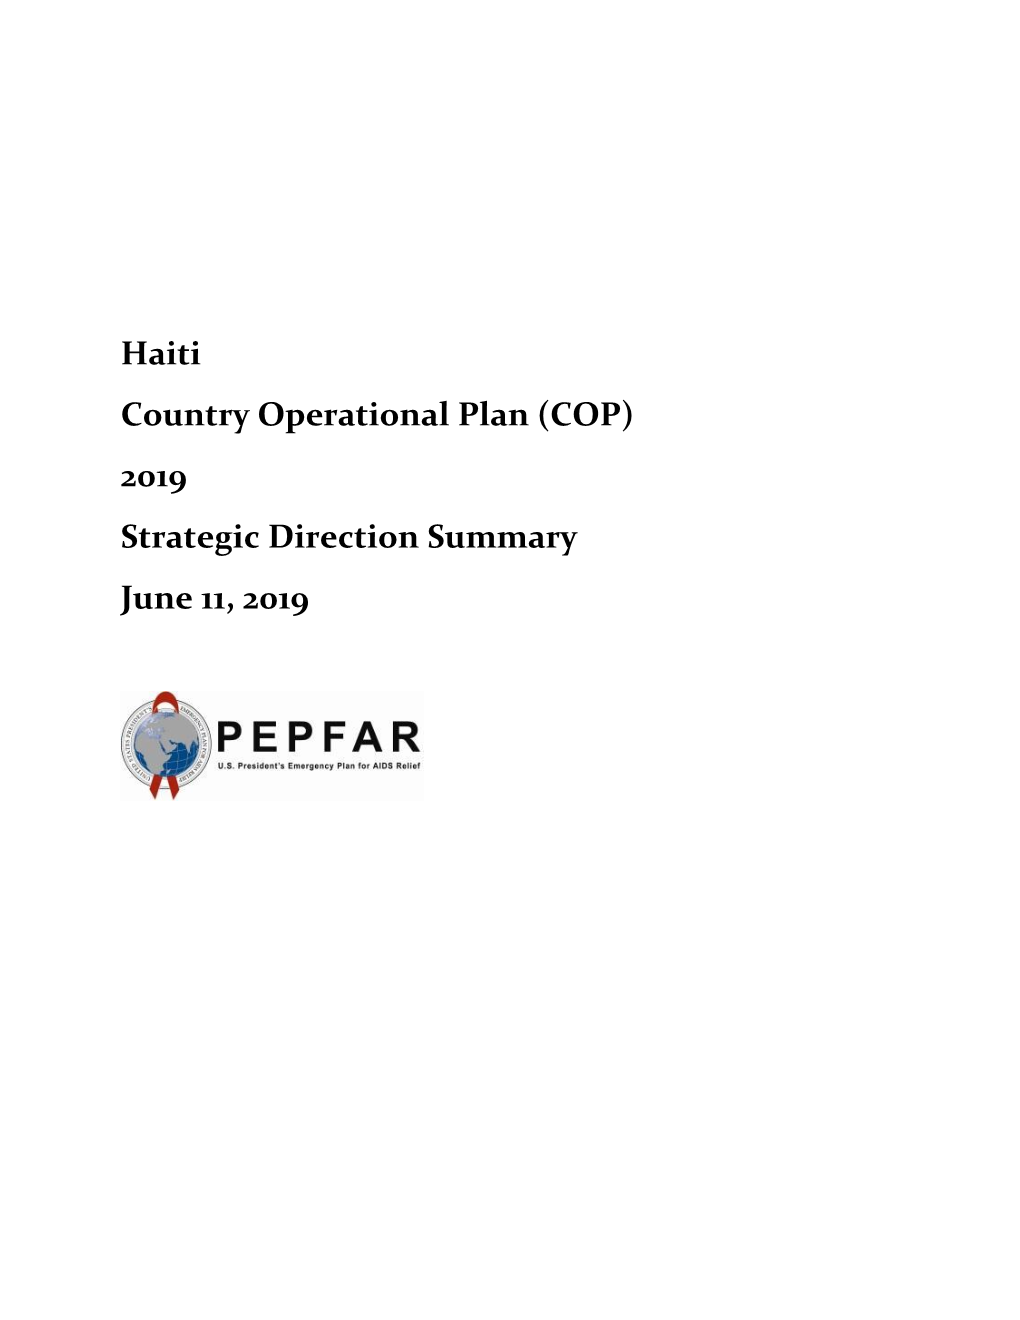 Haiti Country Operational Plan (COP) 2019 Strategic Direction Summary June 11, 2019